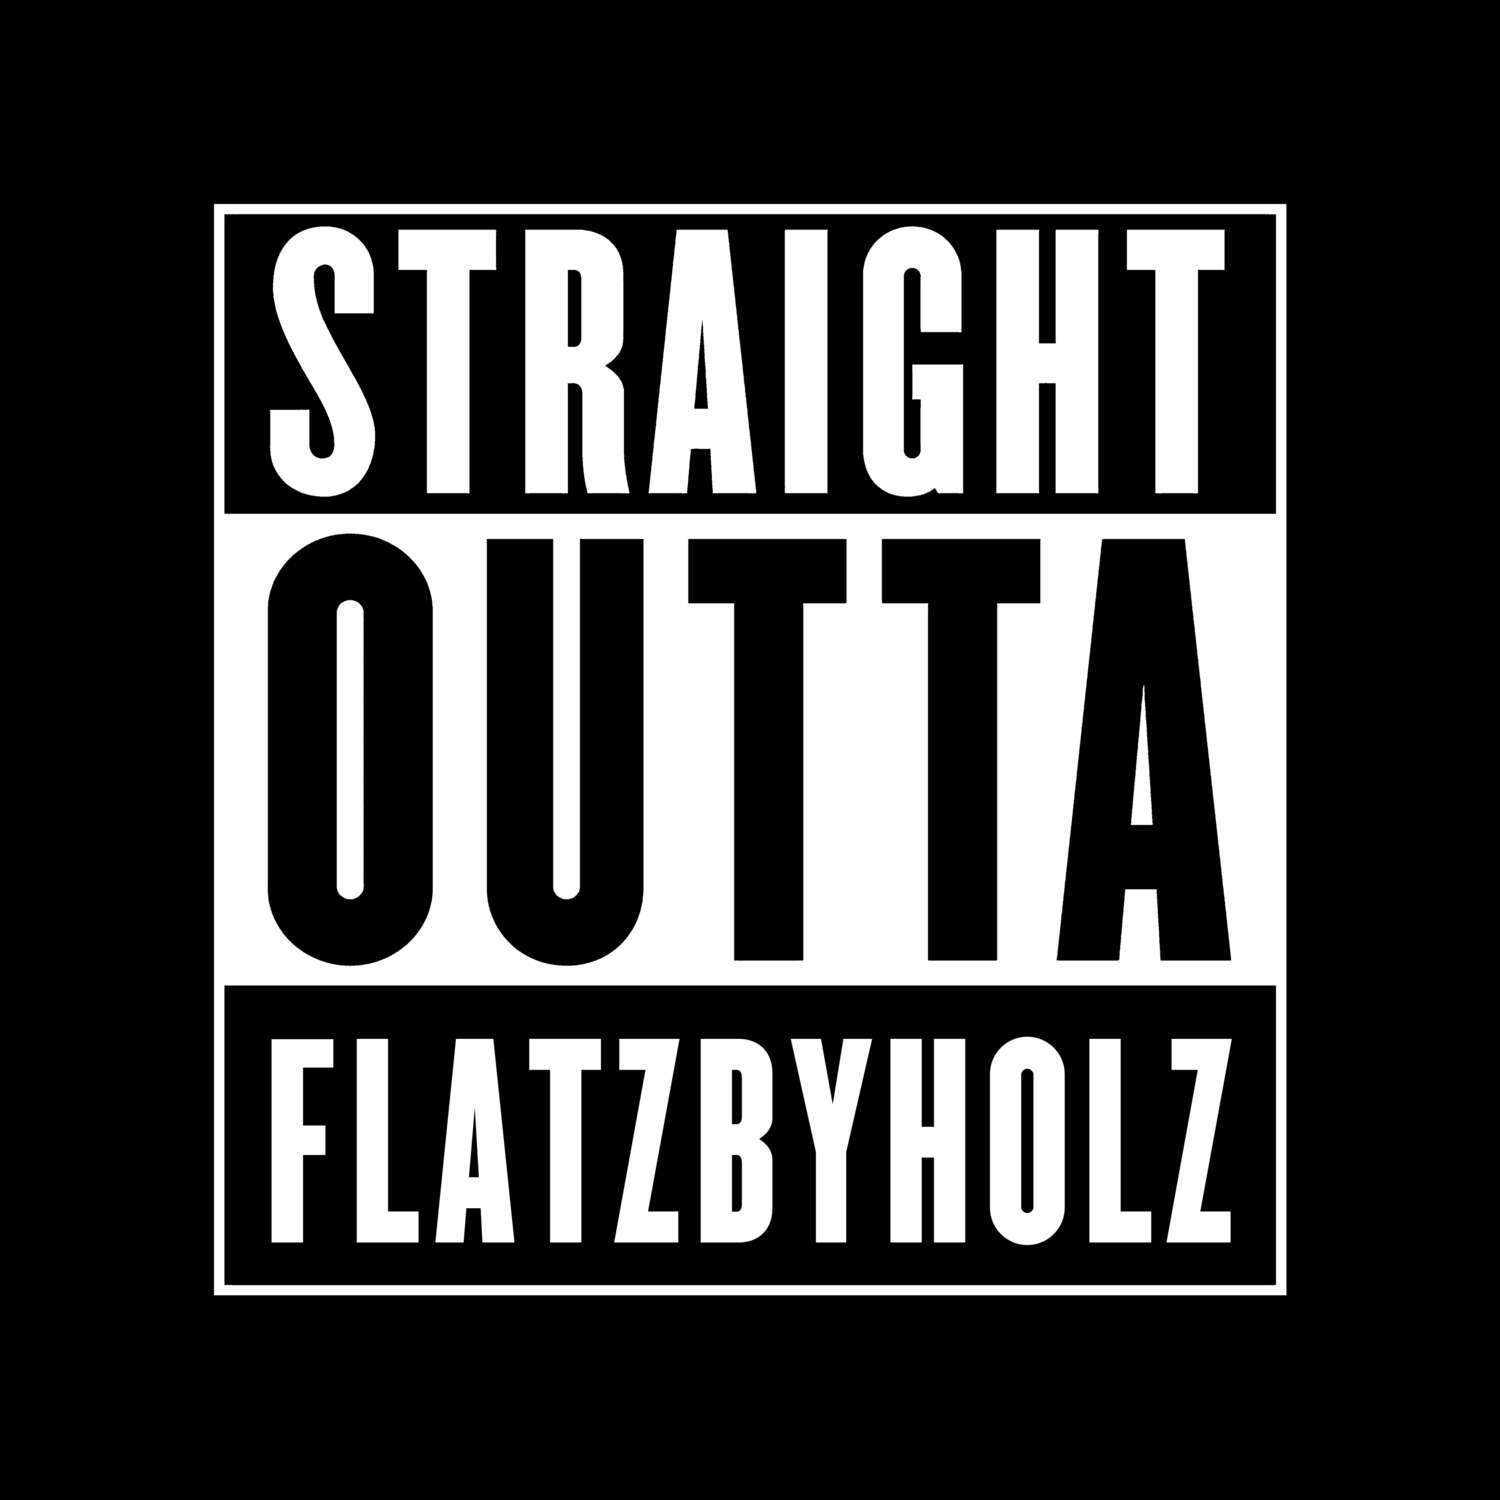 Flatzbyholz T-Shirt »Straight Outta«